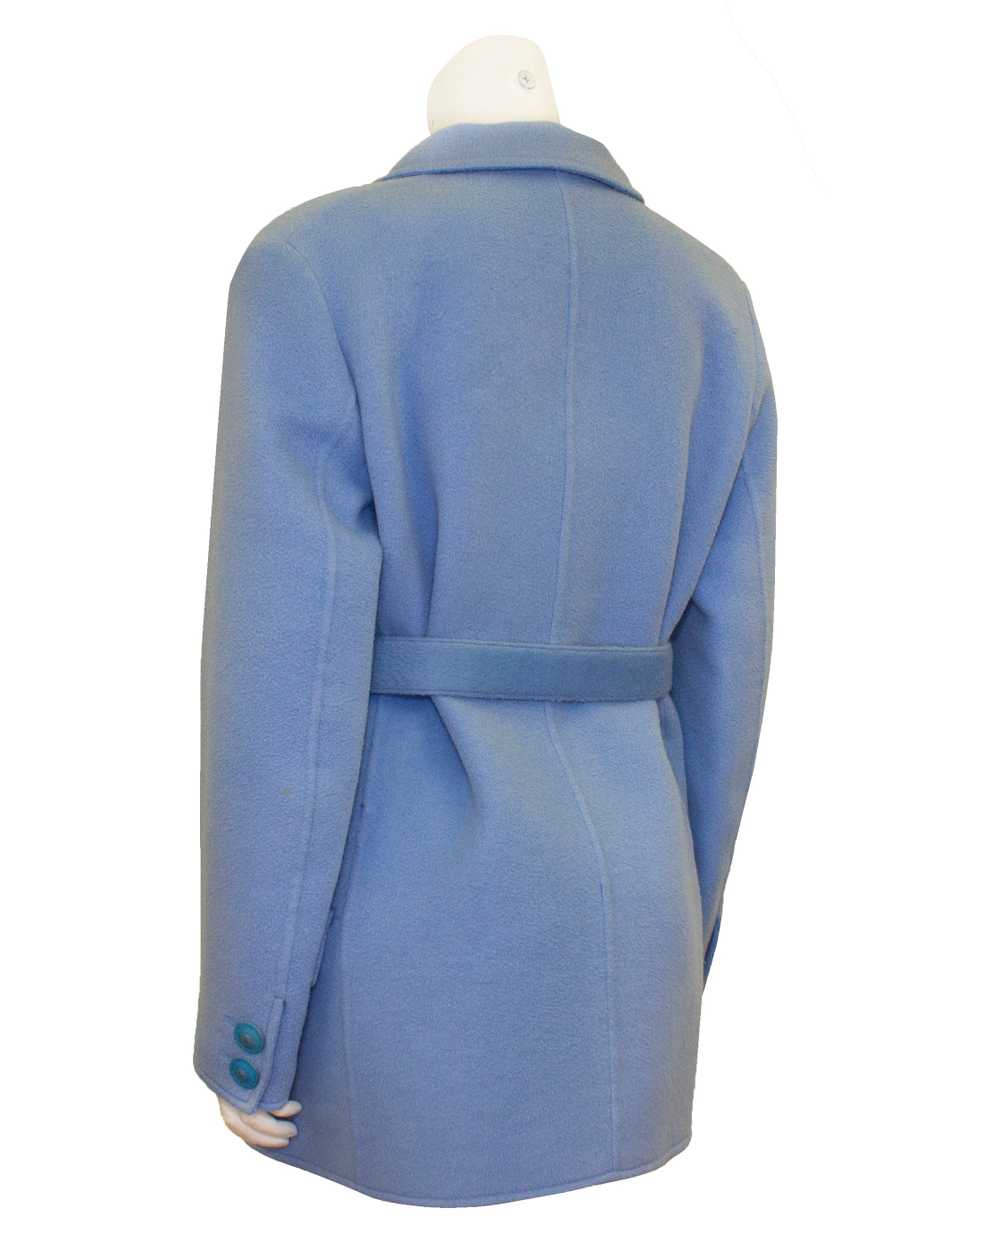 Versace Blue Felted Wool Jacket - image 2